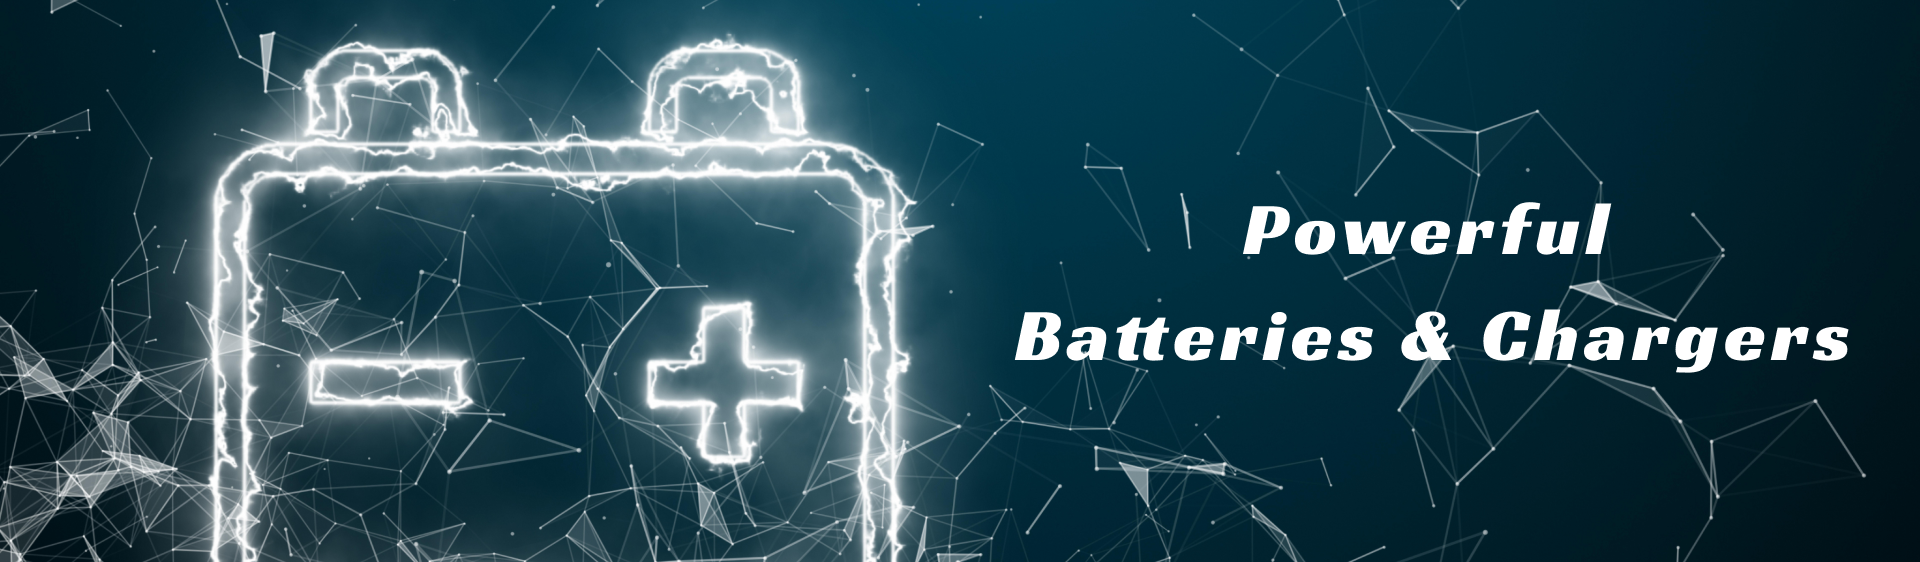 Impact-battery-banner